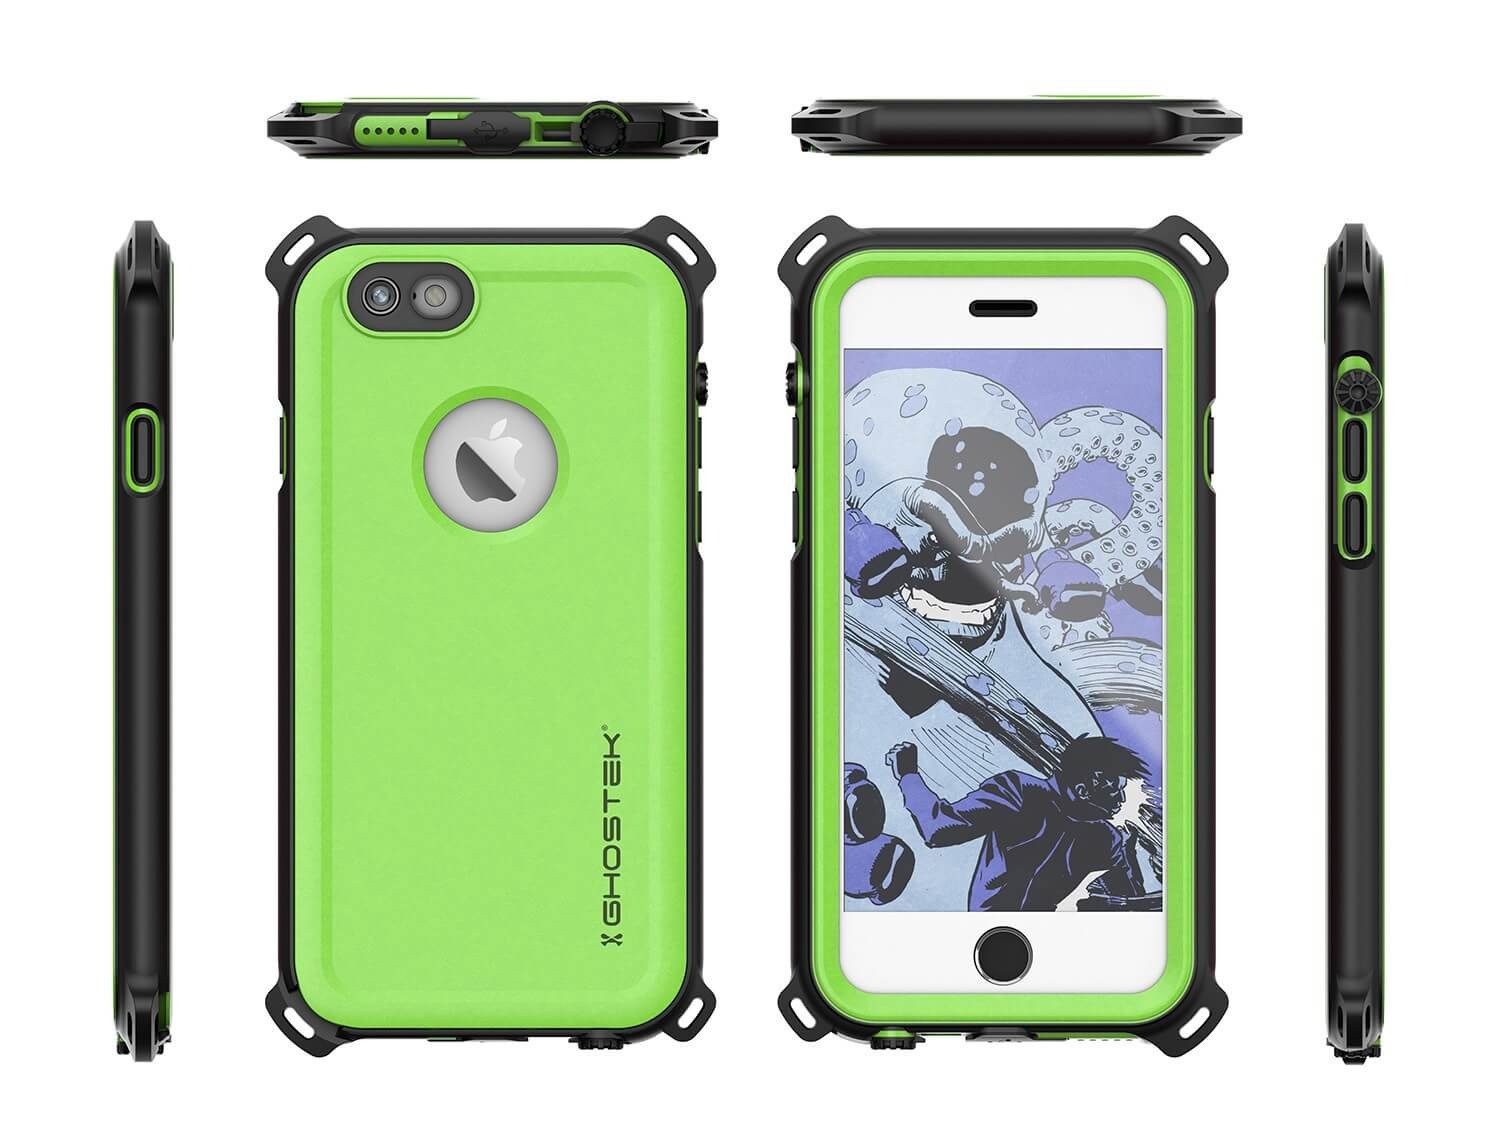 iPhone 6S/6 Waterproof Case, Ghostek® Nautical Green Series| Underwater | Aluminum Frame | Ultra Fit - PunkCase NZ